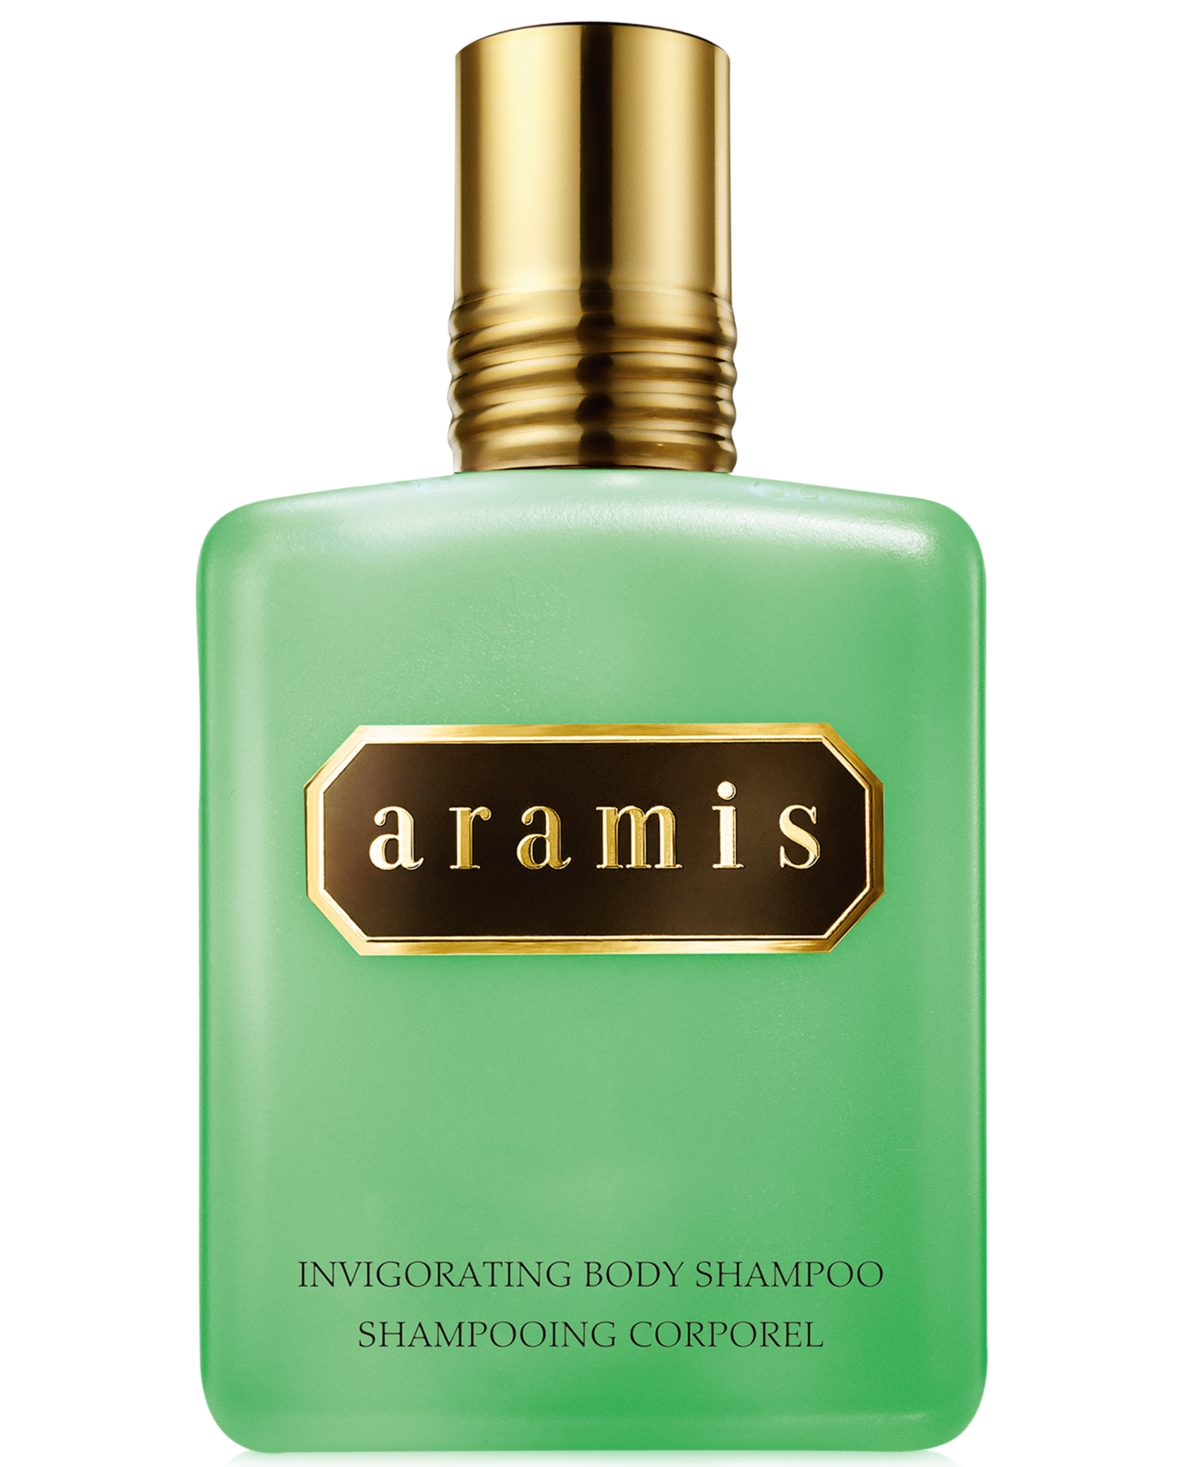 Aramis Invigorating Body Shampoo